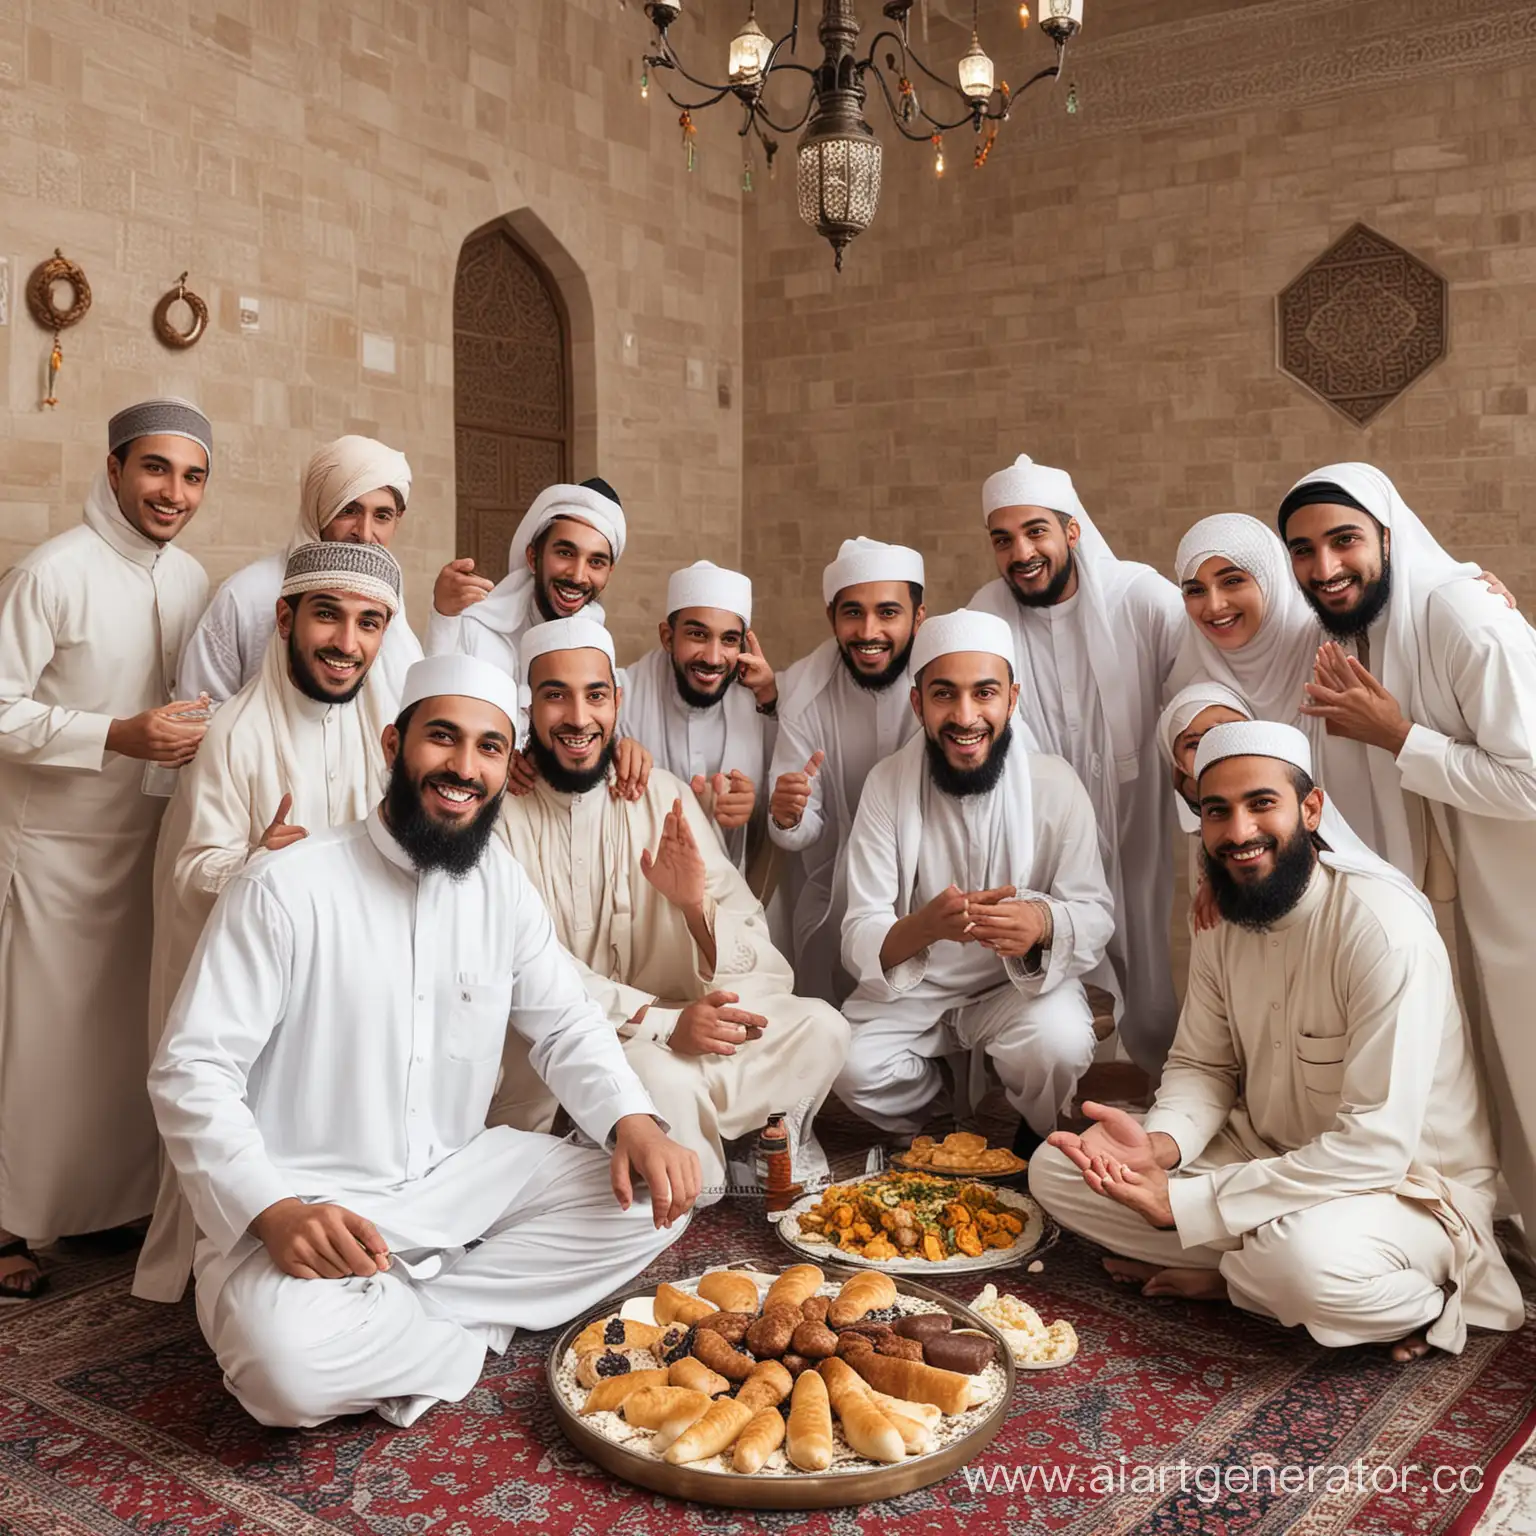 Joyful-Halal-Holiday-Celebration-by-Muslim-Company